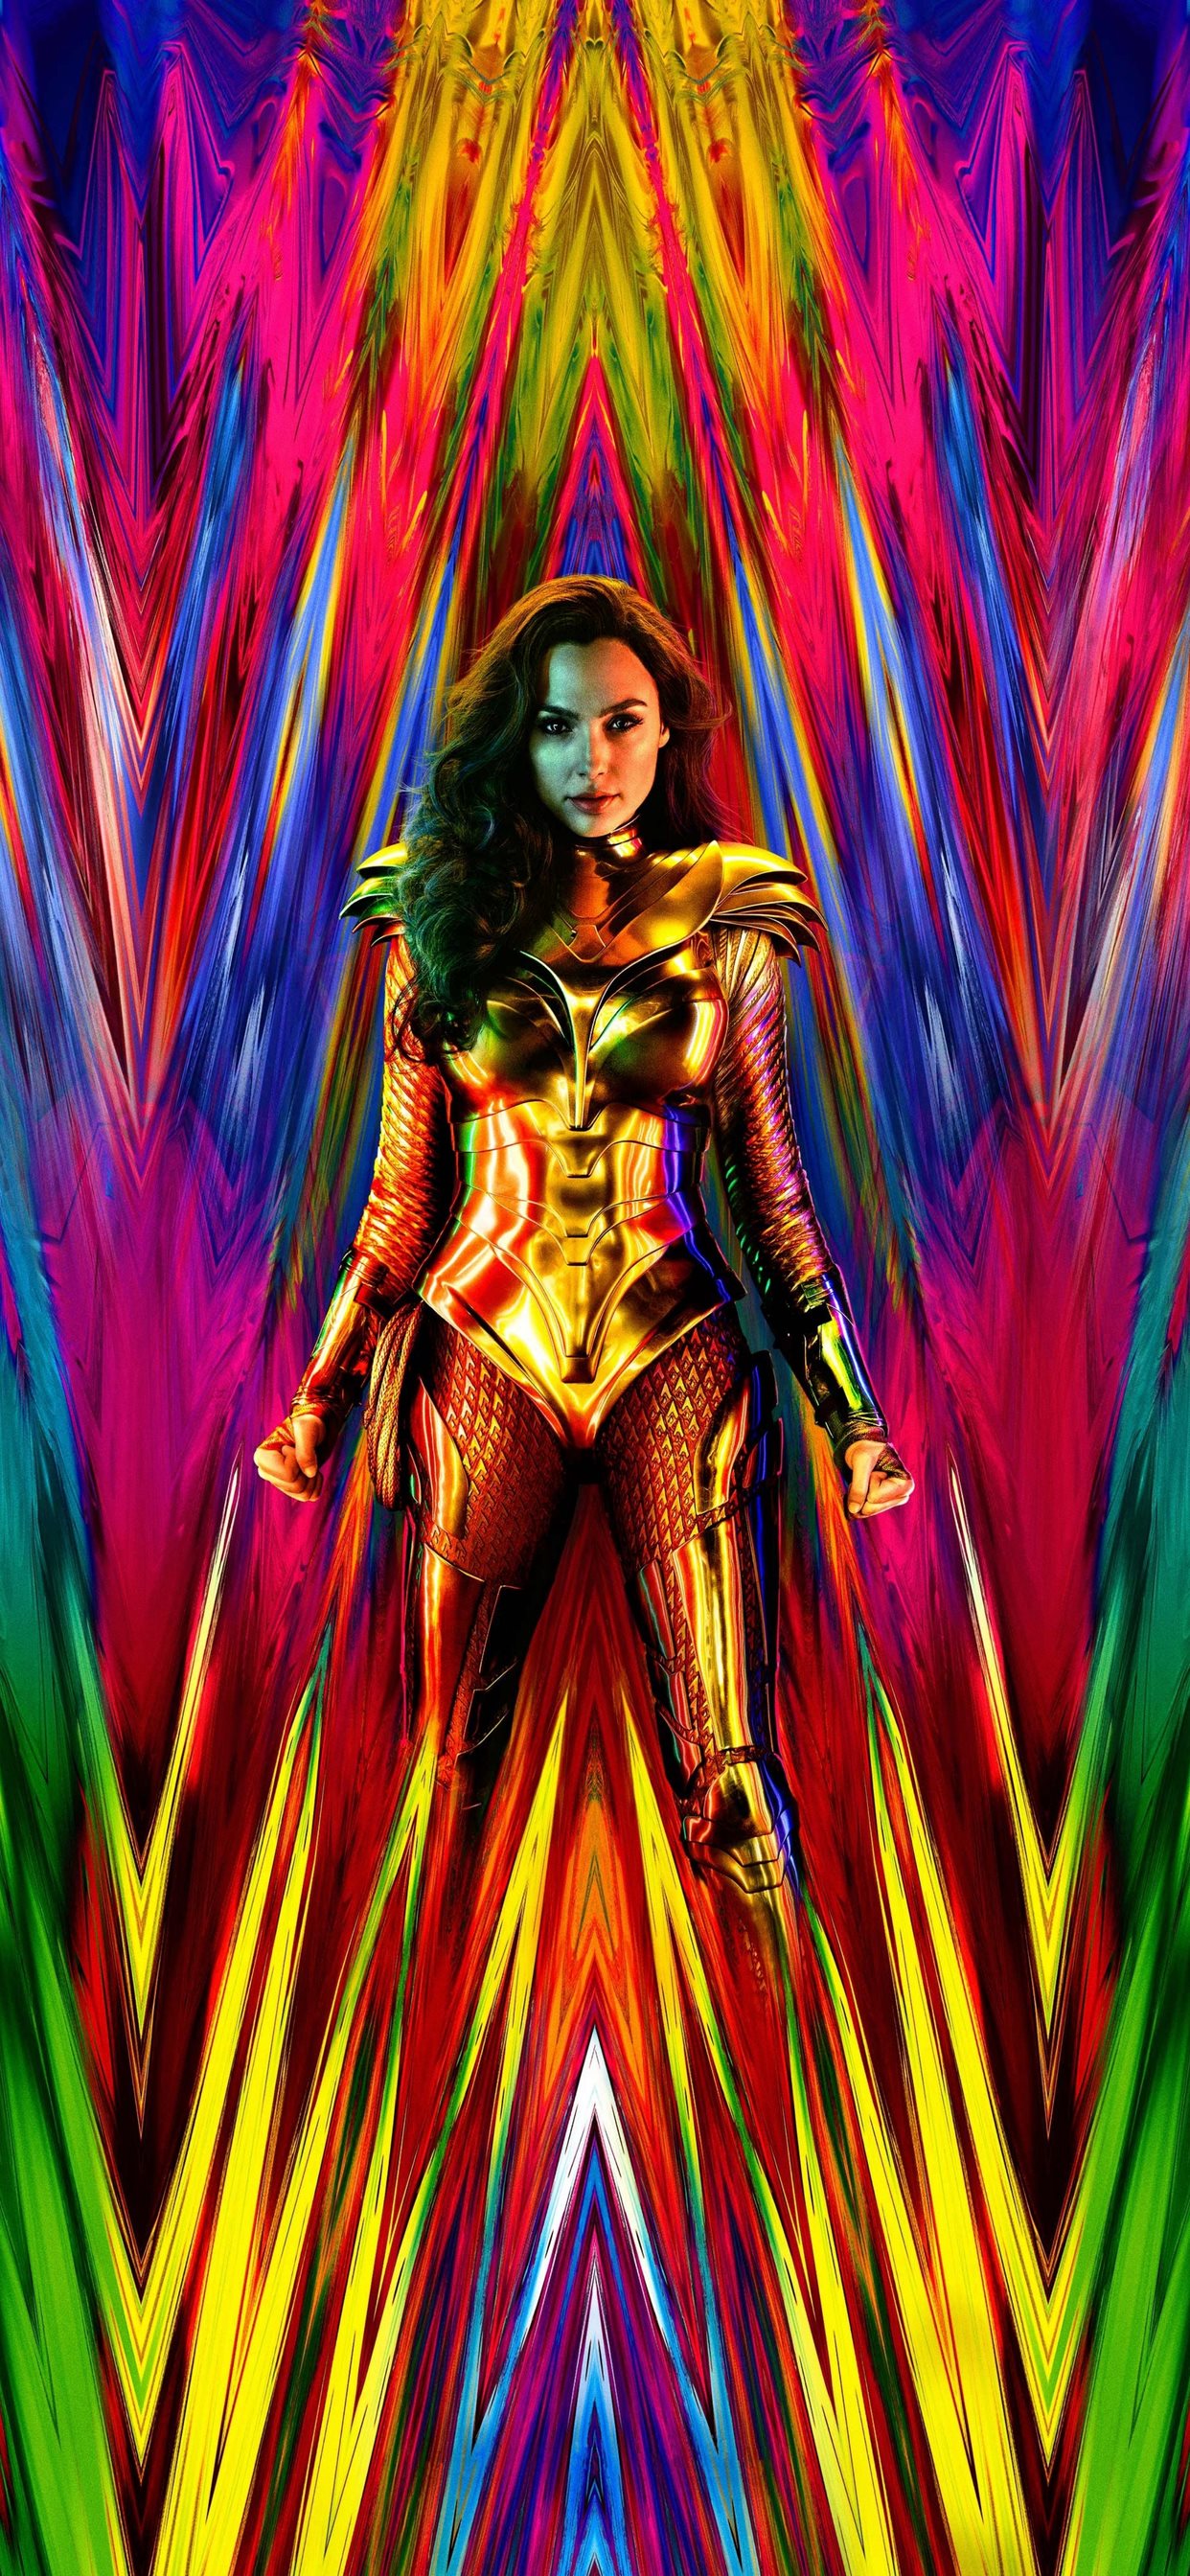 Wonder Woman 2020 Wallpapers